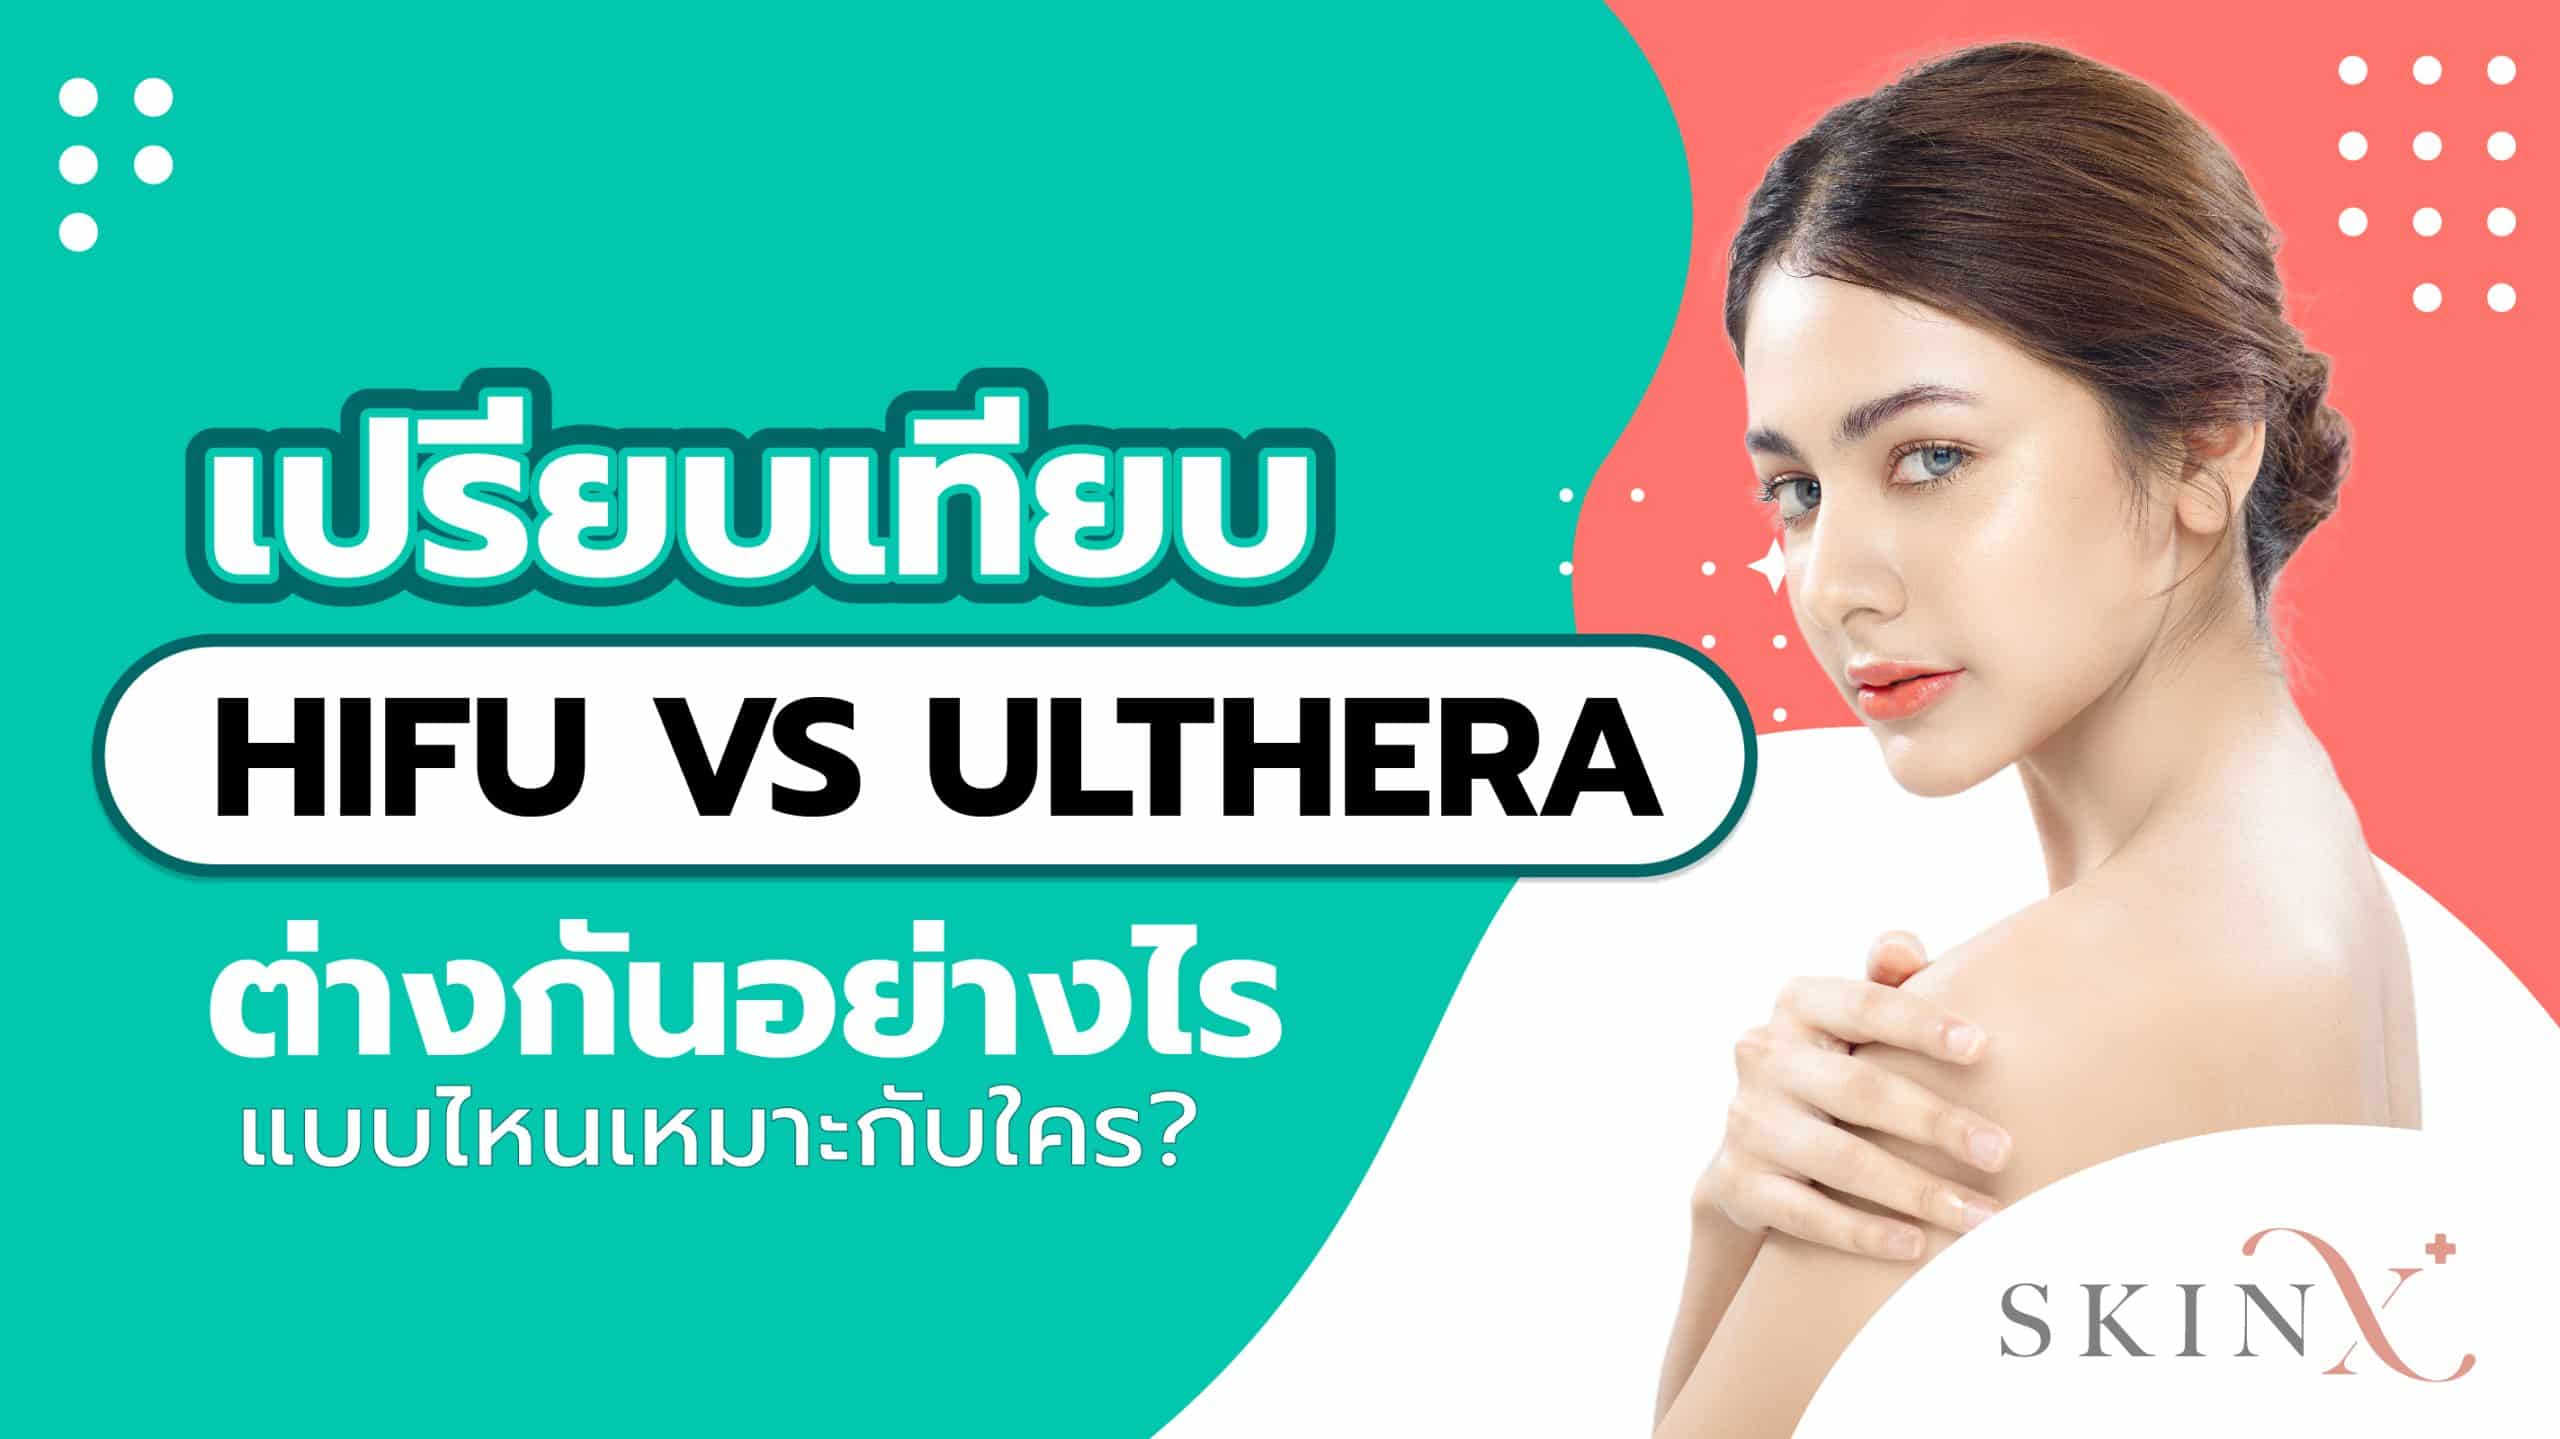 HIFU vs Ulthera ต่างกันอย่างไร